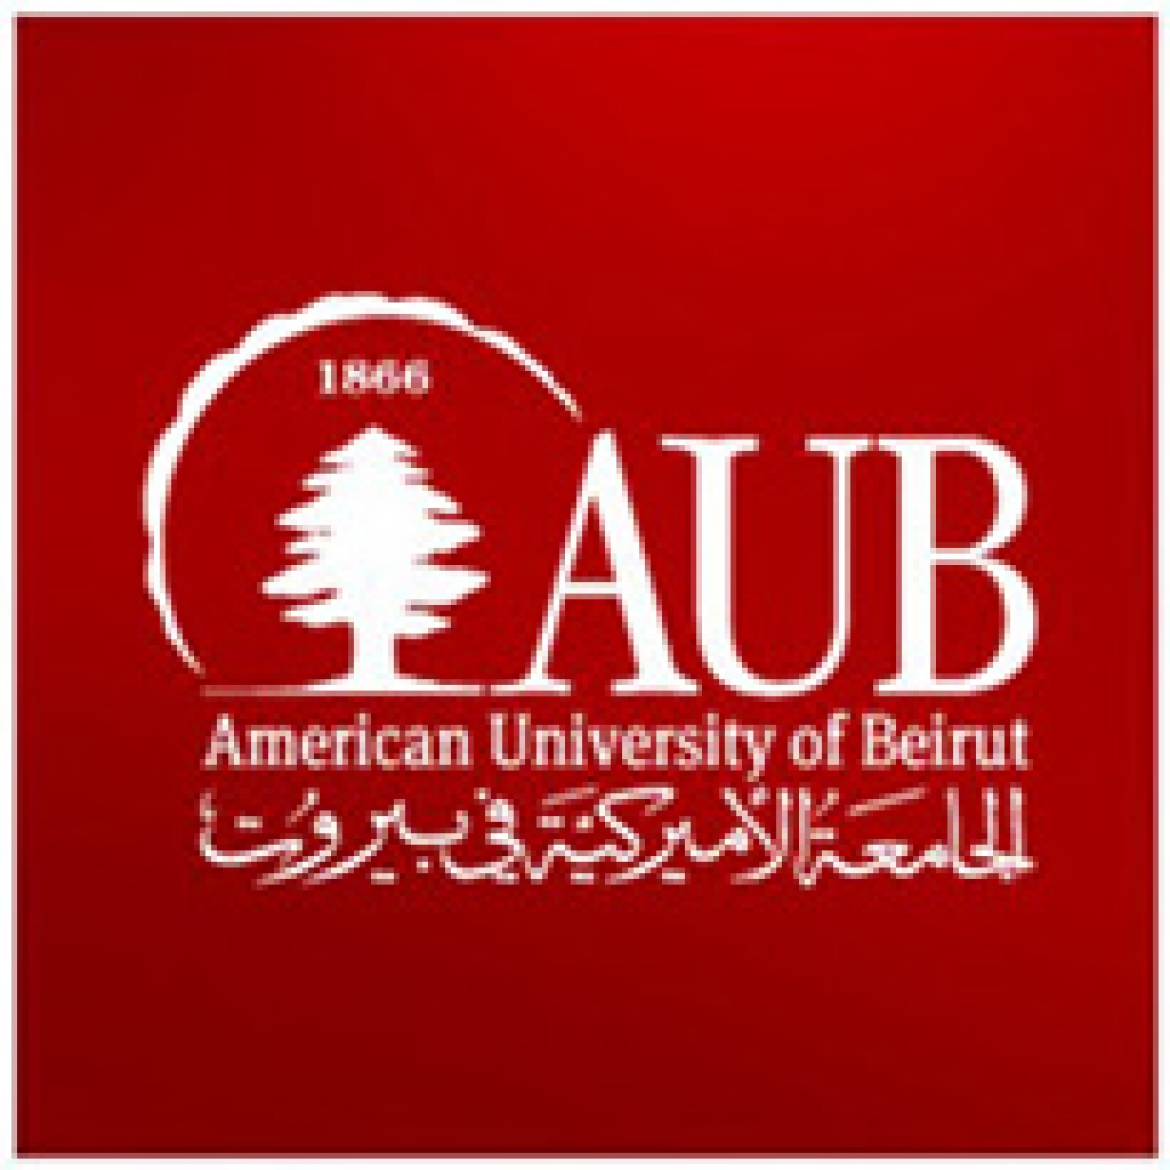 American University of Beirut, AUB